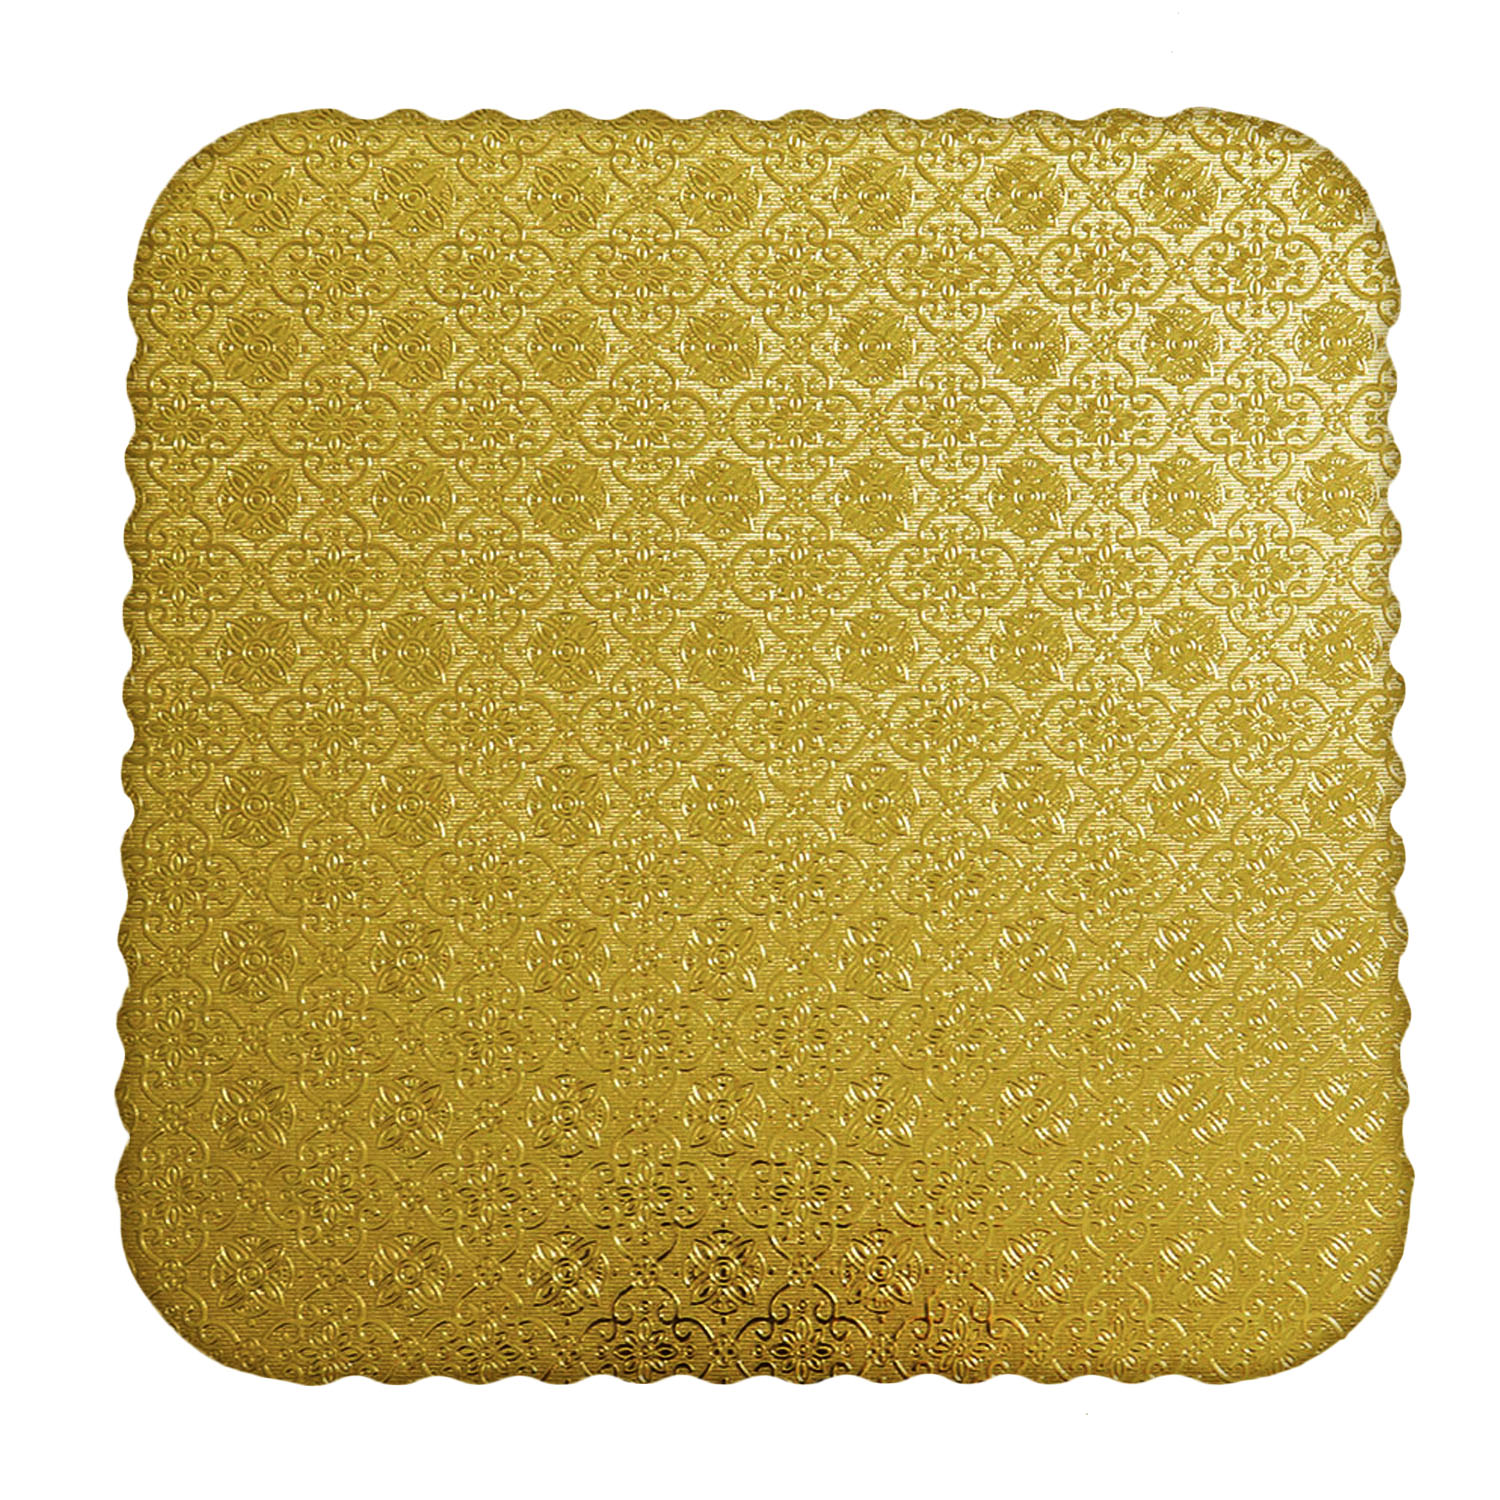 O'Creme Gold Corrugated Scalloped Square Cake Board, 9", Pack of 10 